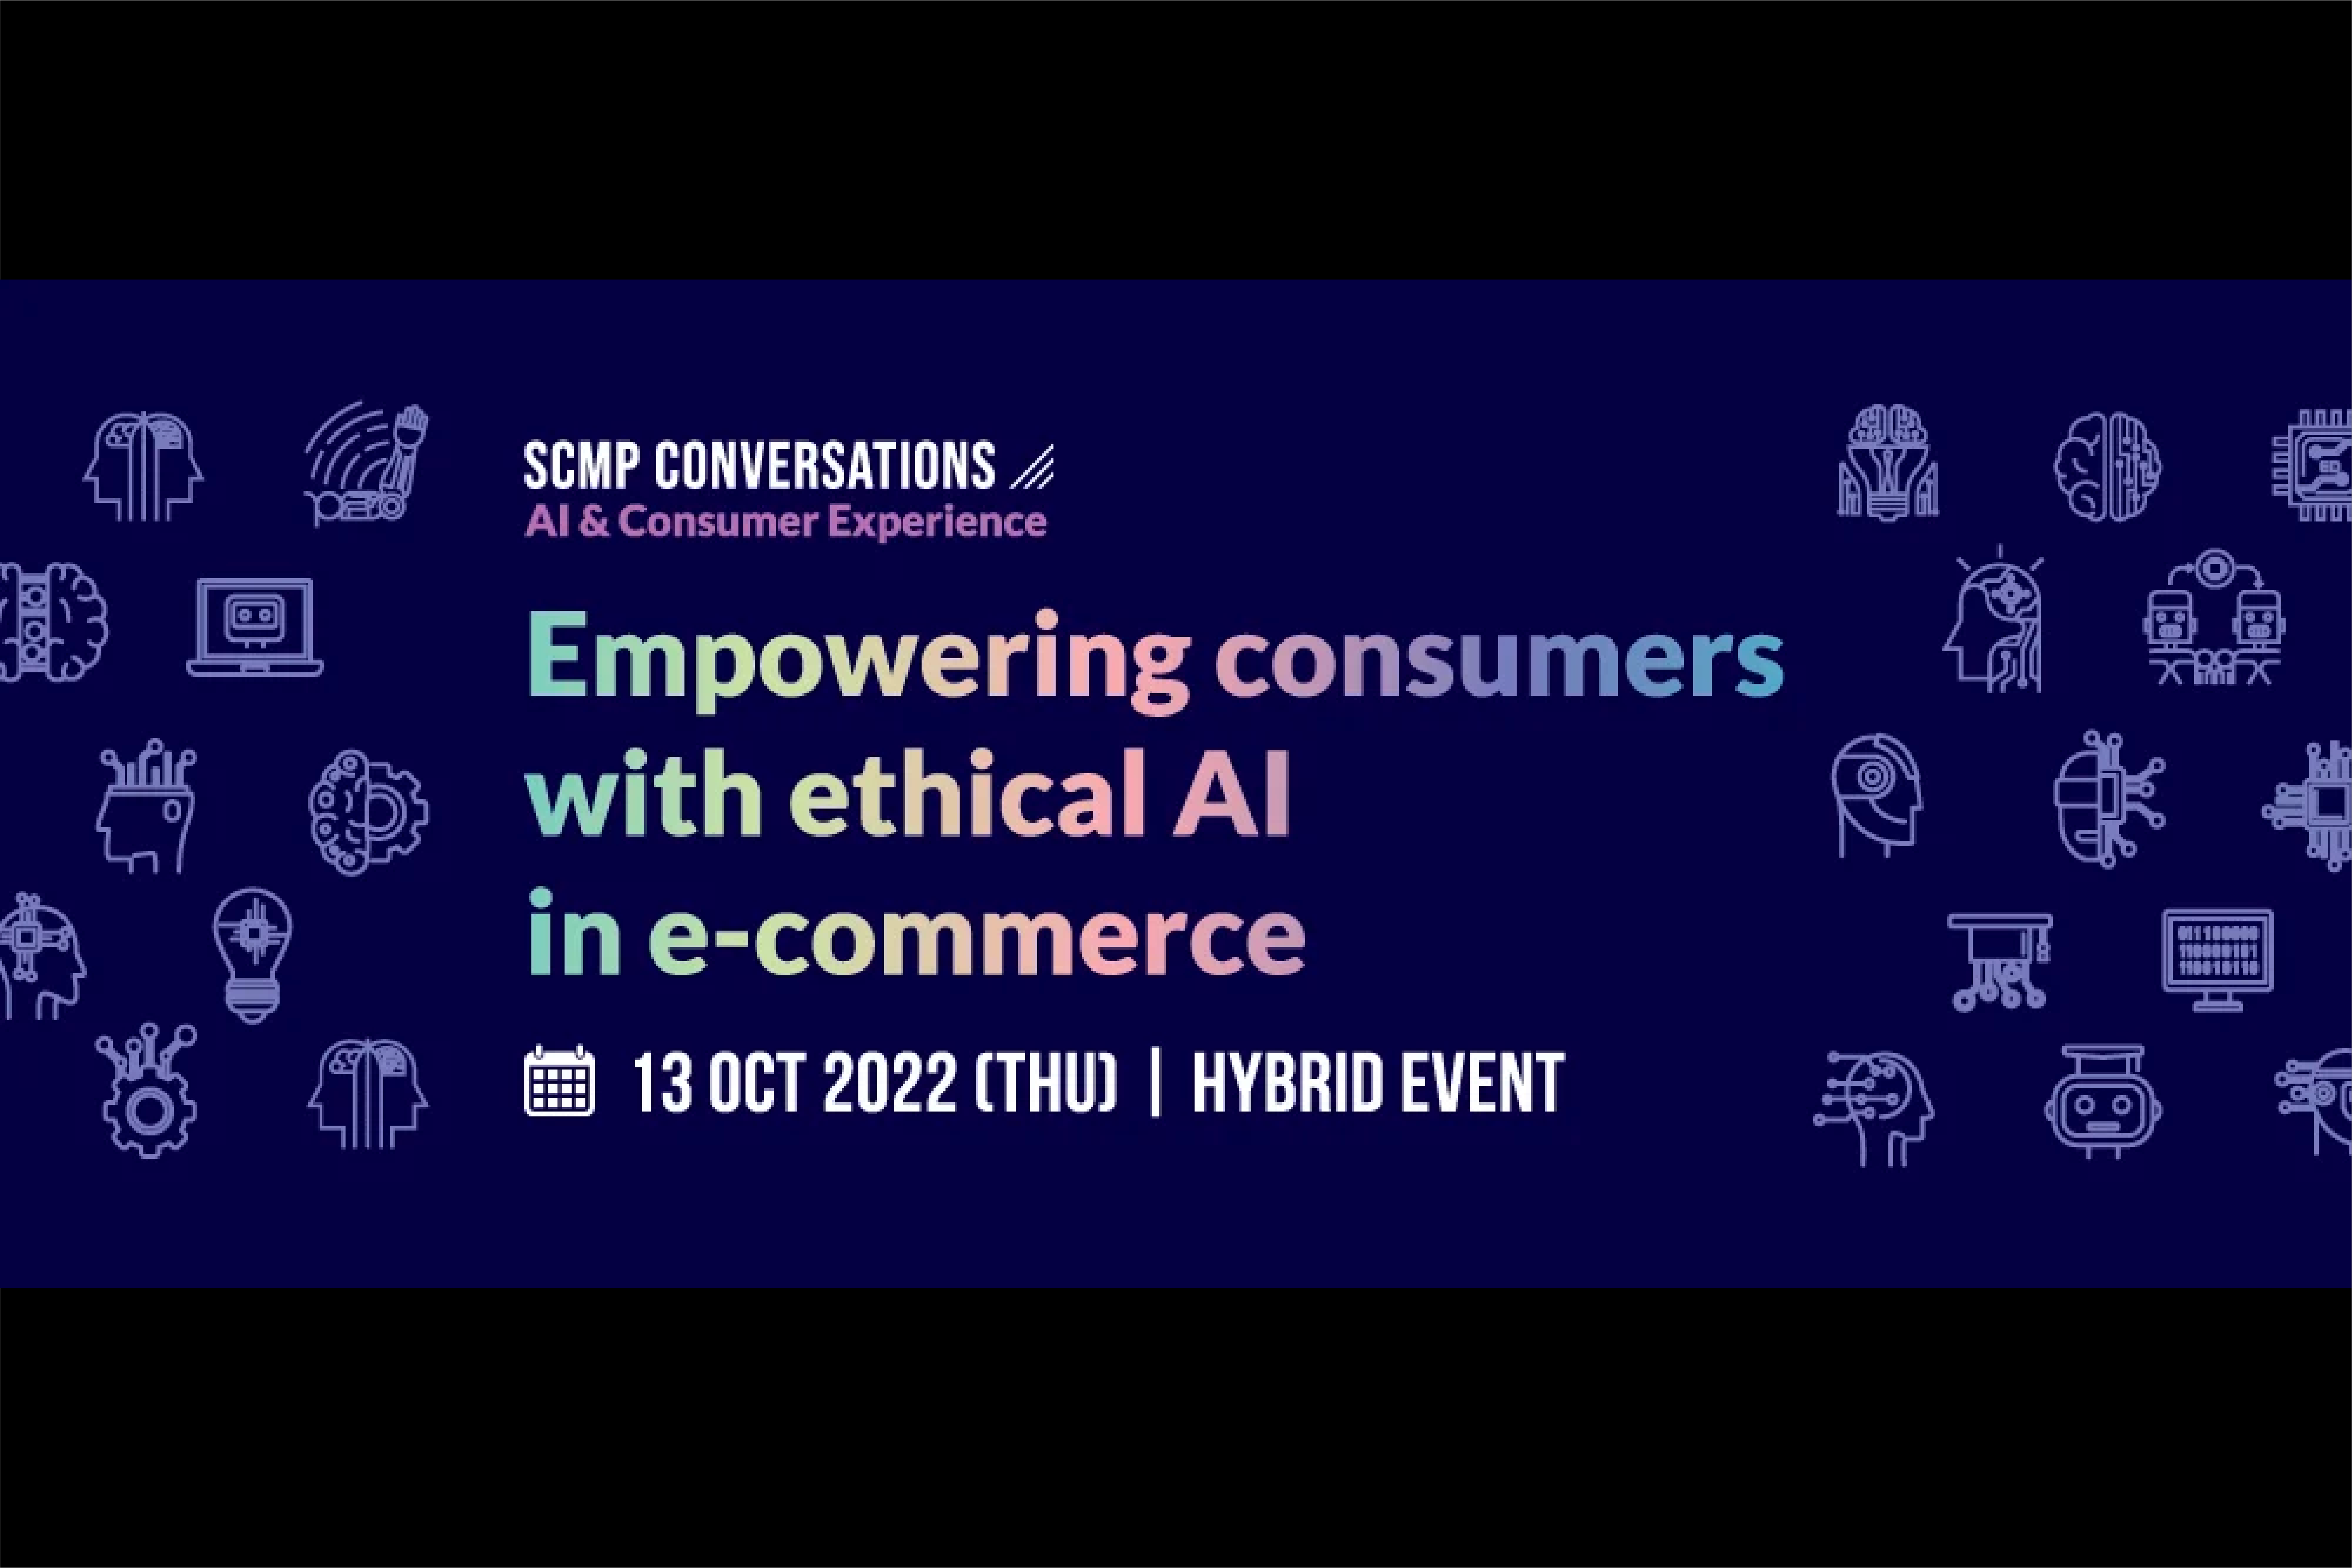 SCMP Conversations: AI & Consumer Experience